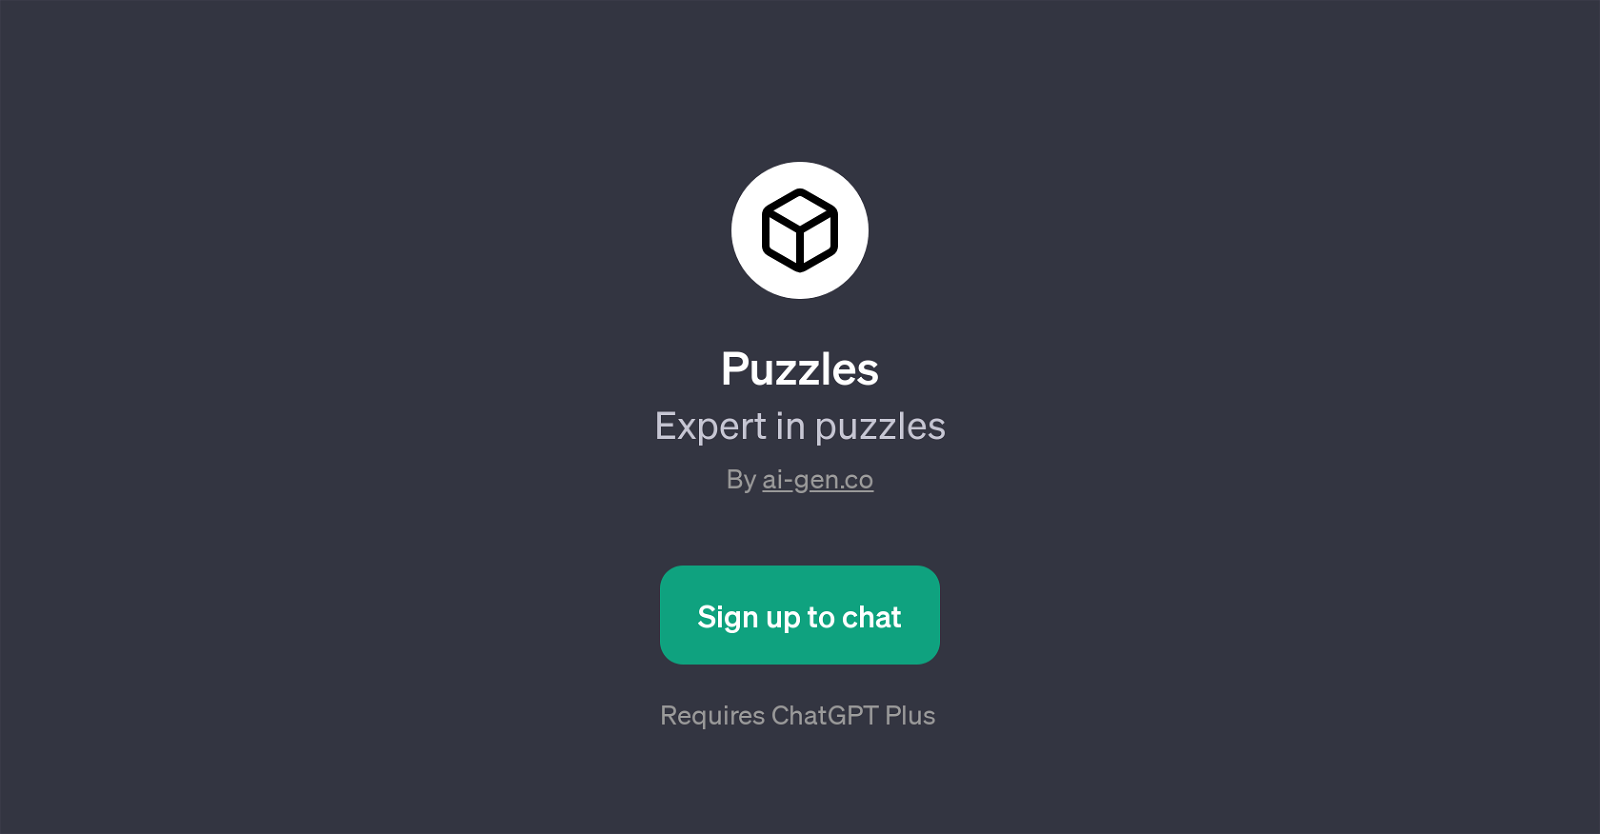 PuzzlesPage website